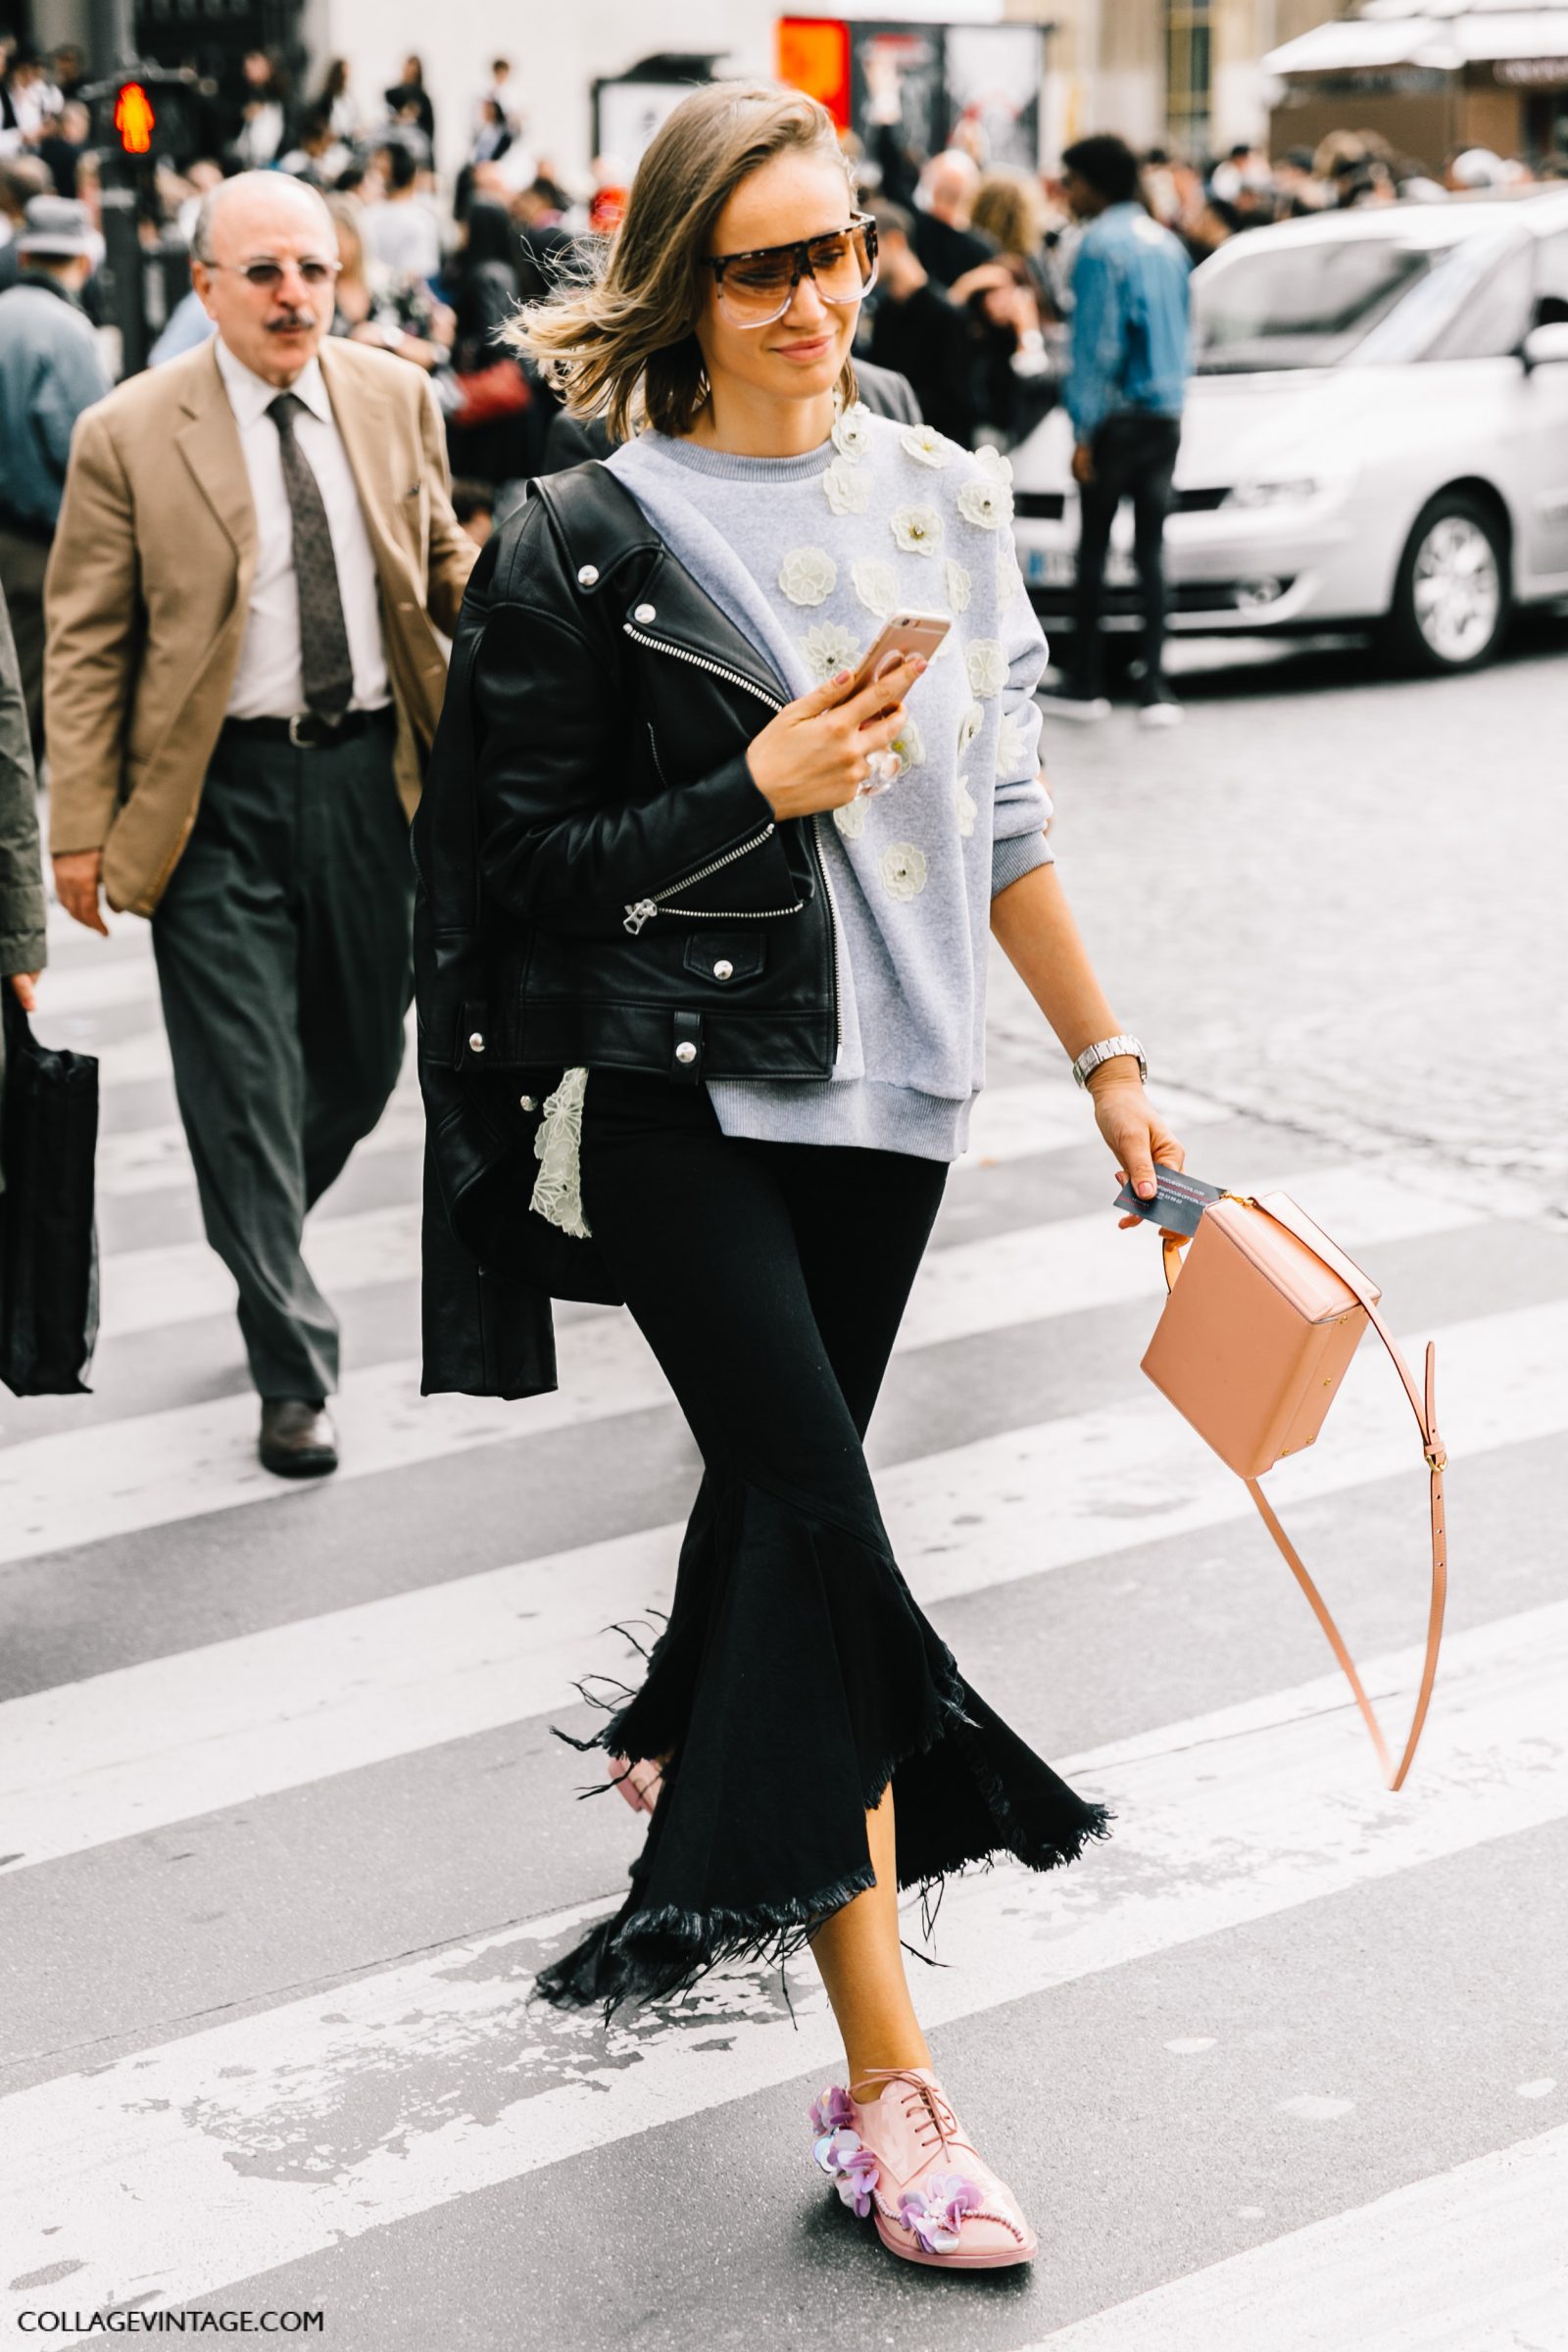 pfw-paris_fashion_week_ss17-street_style-outfits-collage_vintage-chloe-carven-balmain-barbara_bui-137